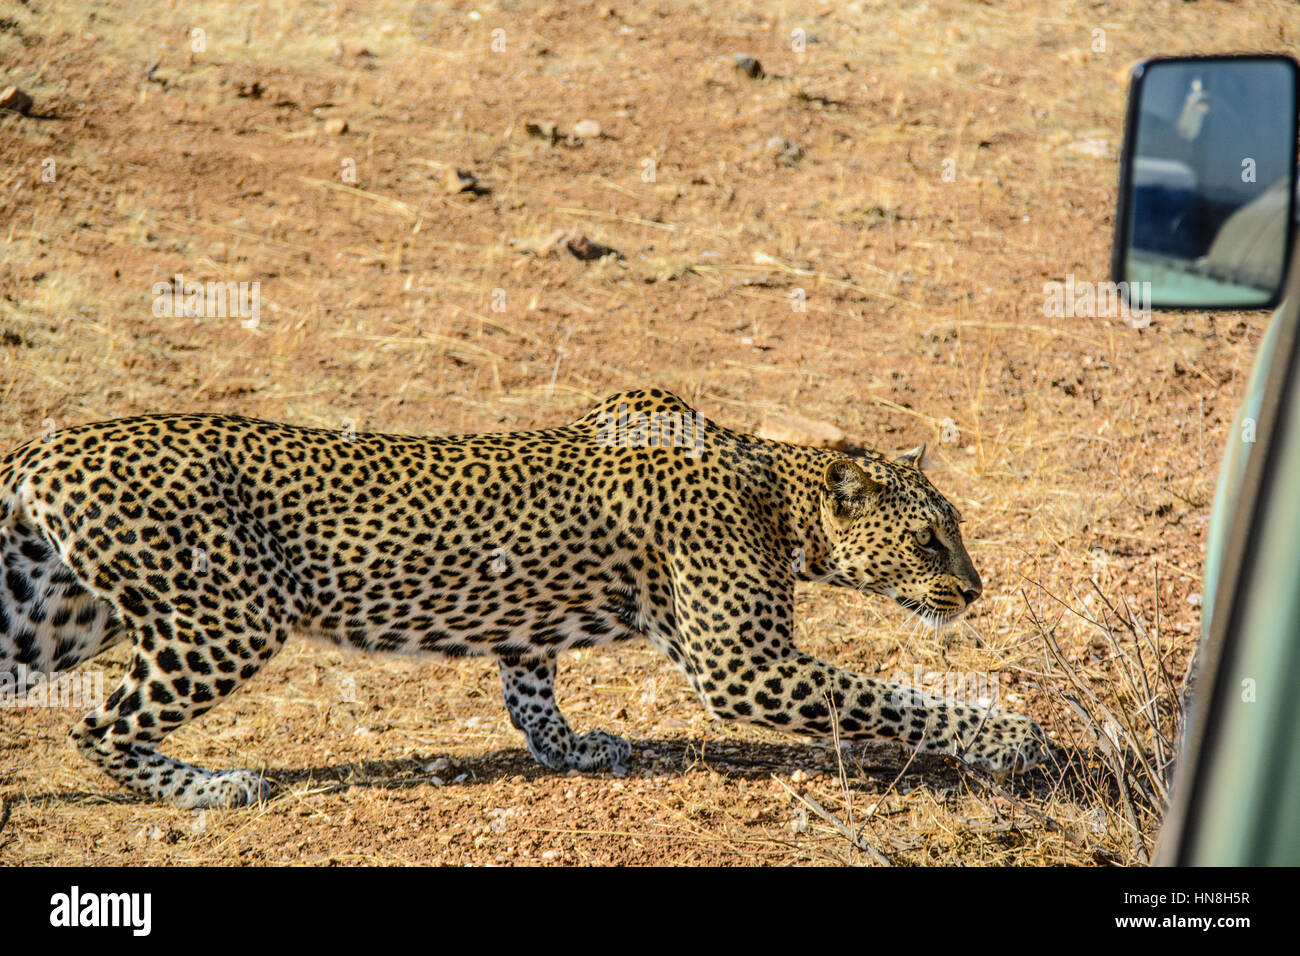 Adult wild African Leopard, Panthera pardus, slinking past a safari vehicle in Samburu, Northern Kenya, Africa, Leopard hunting behavior Stock Photo